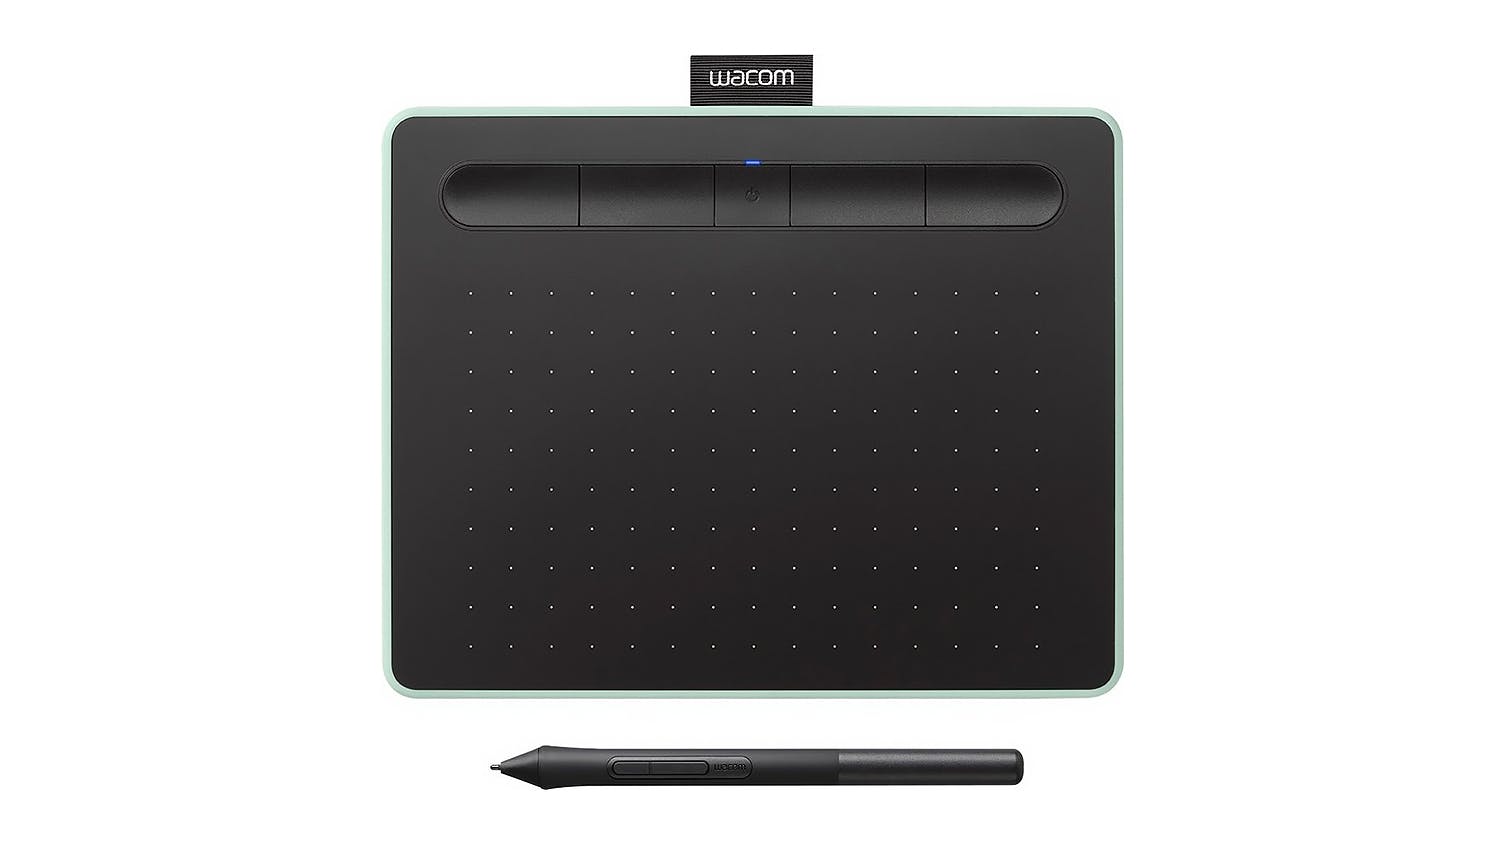 Wacom Intuos Small Graphics Drawing Tablet - Black